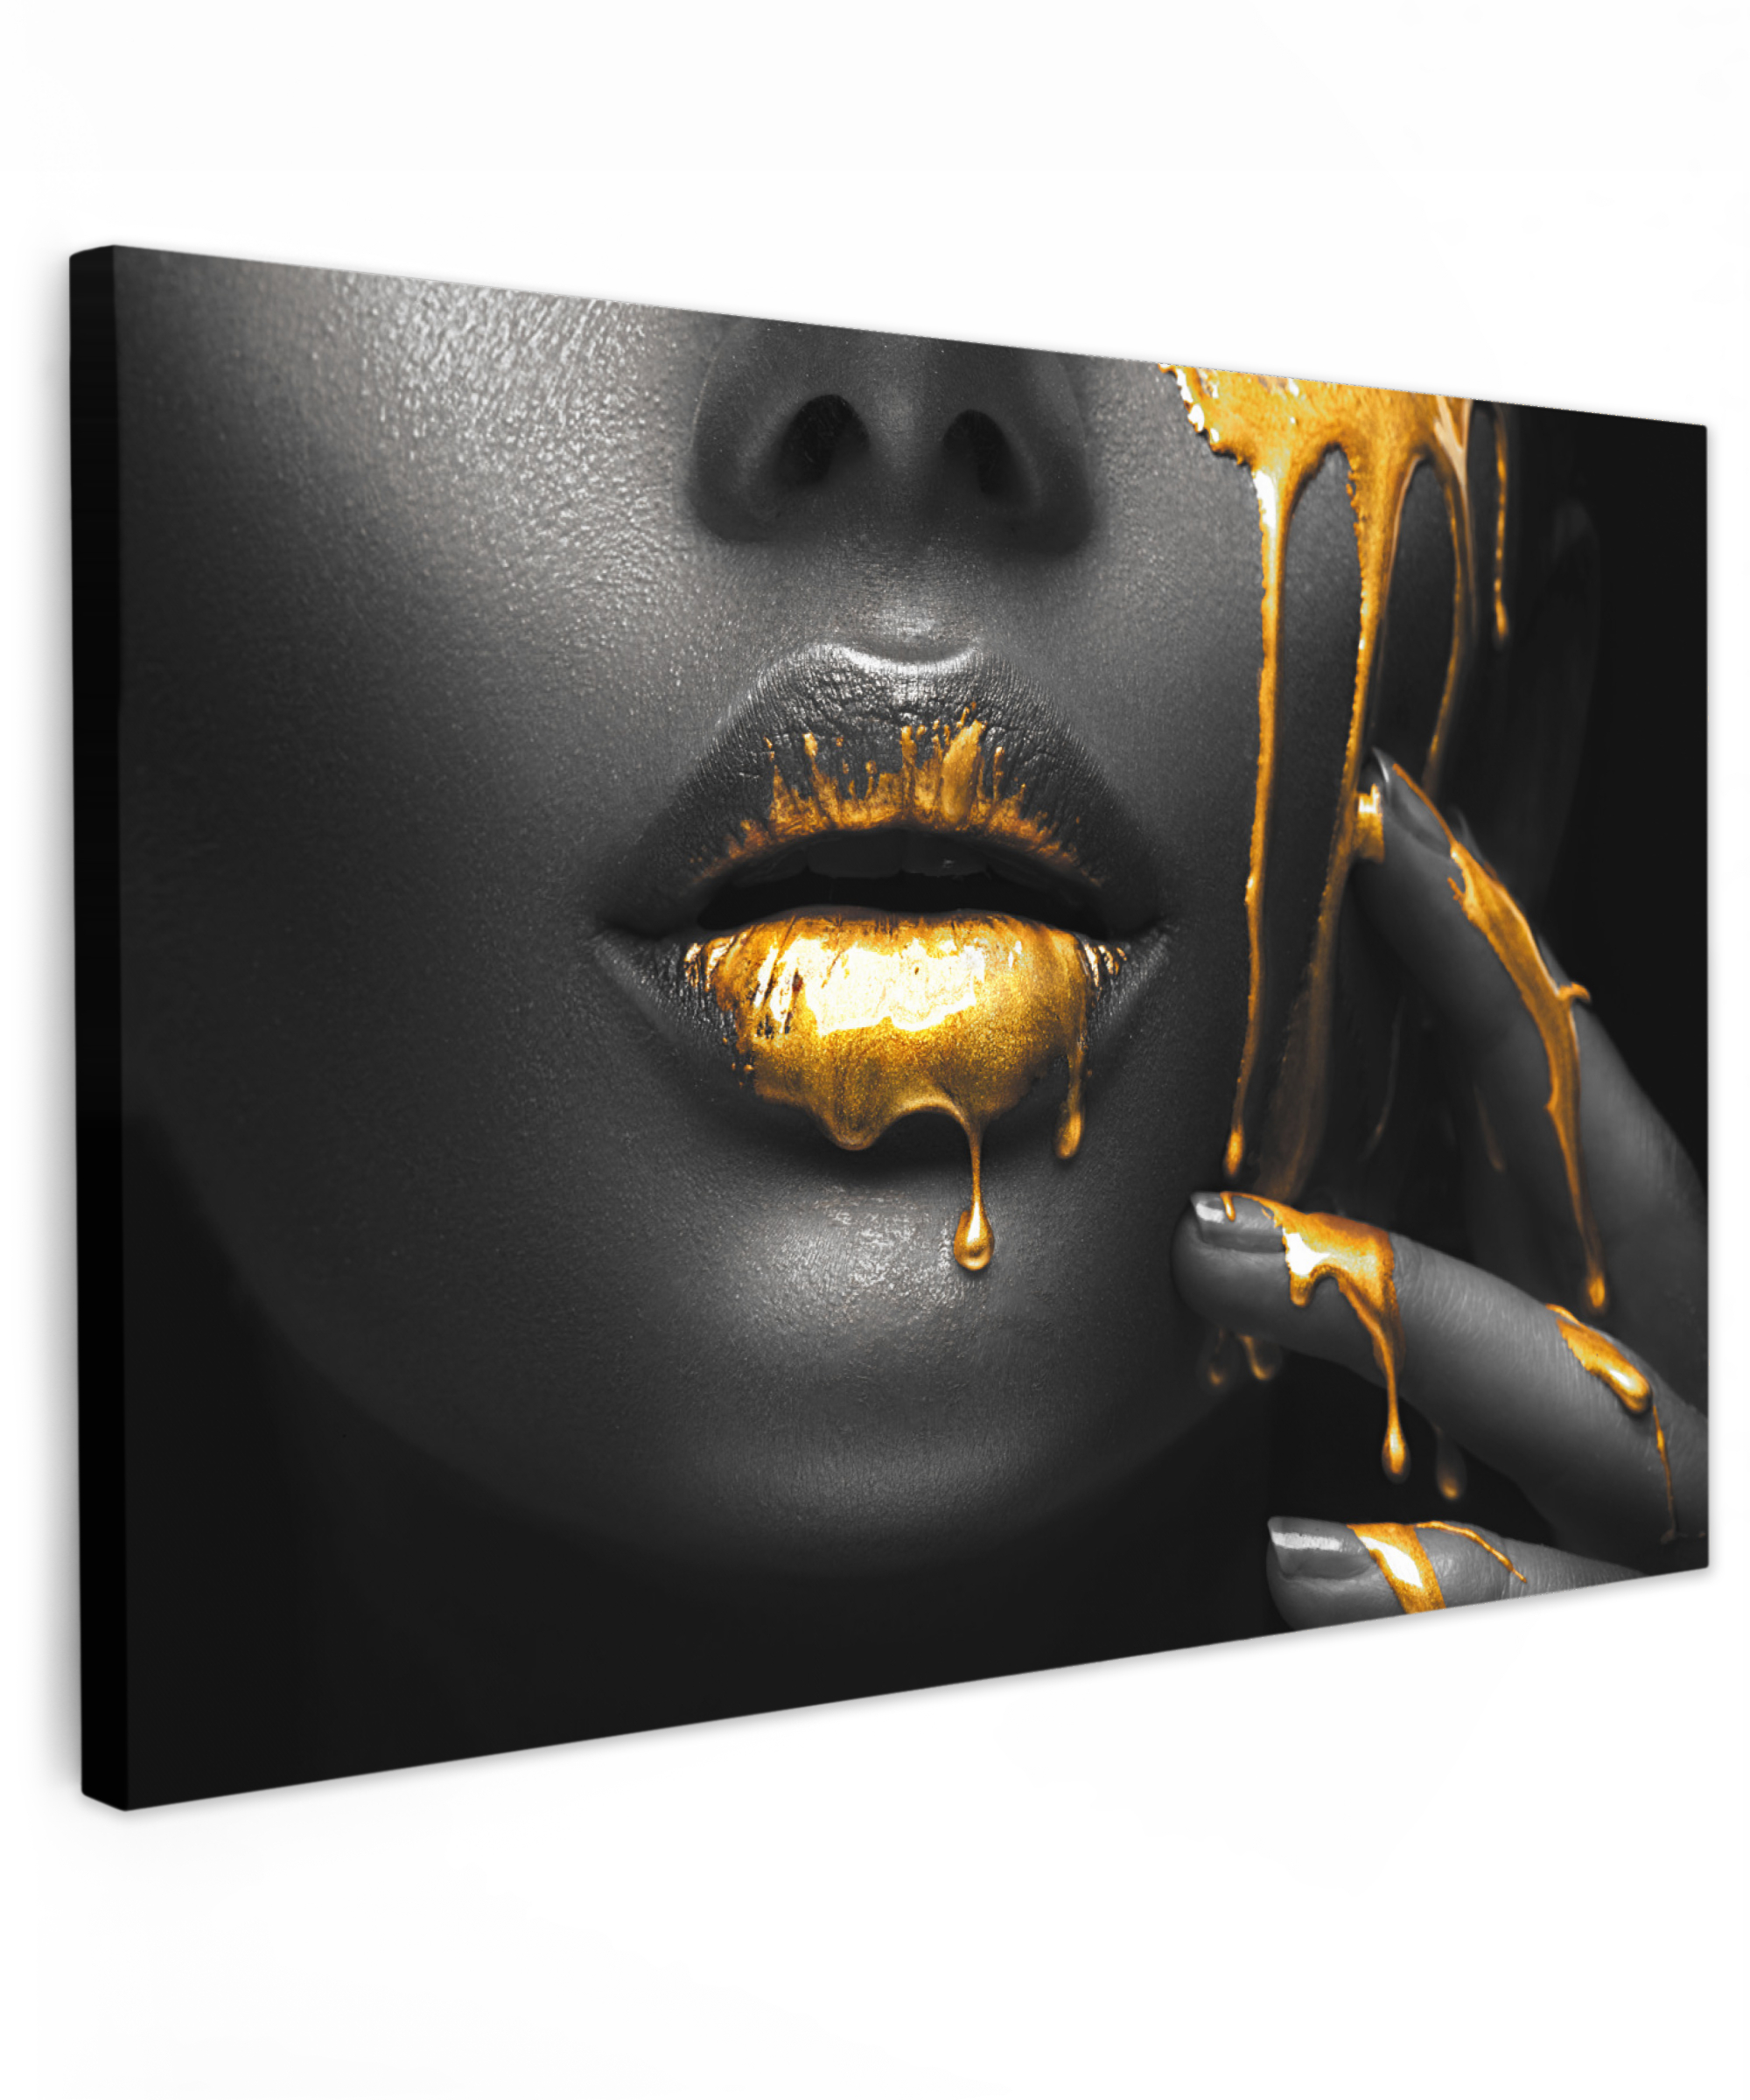 Leinwandbild - Frau - Schwarz - Gold - Gesicht - Lippen